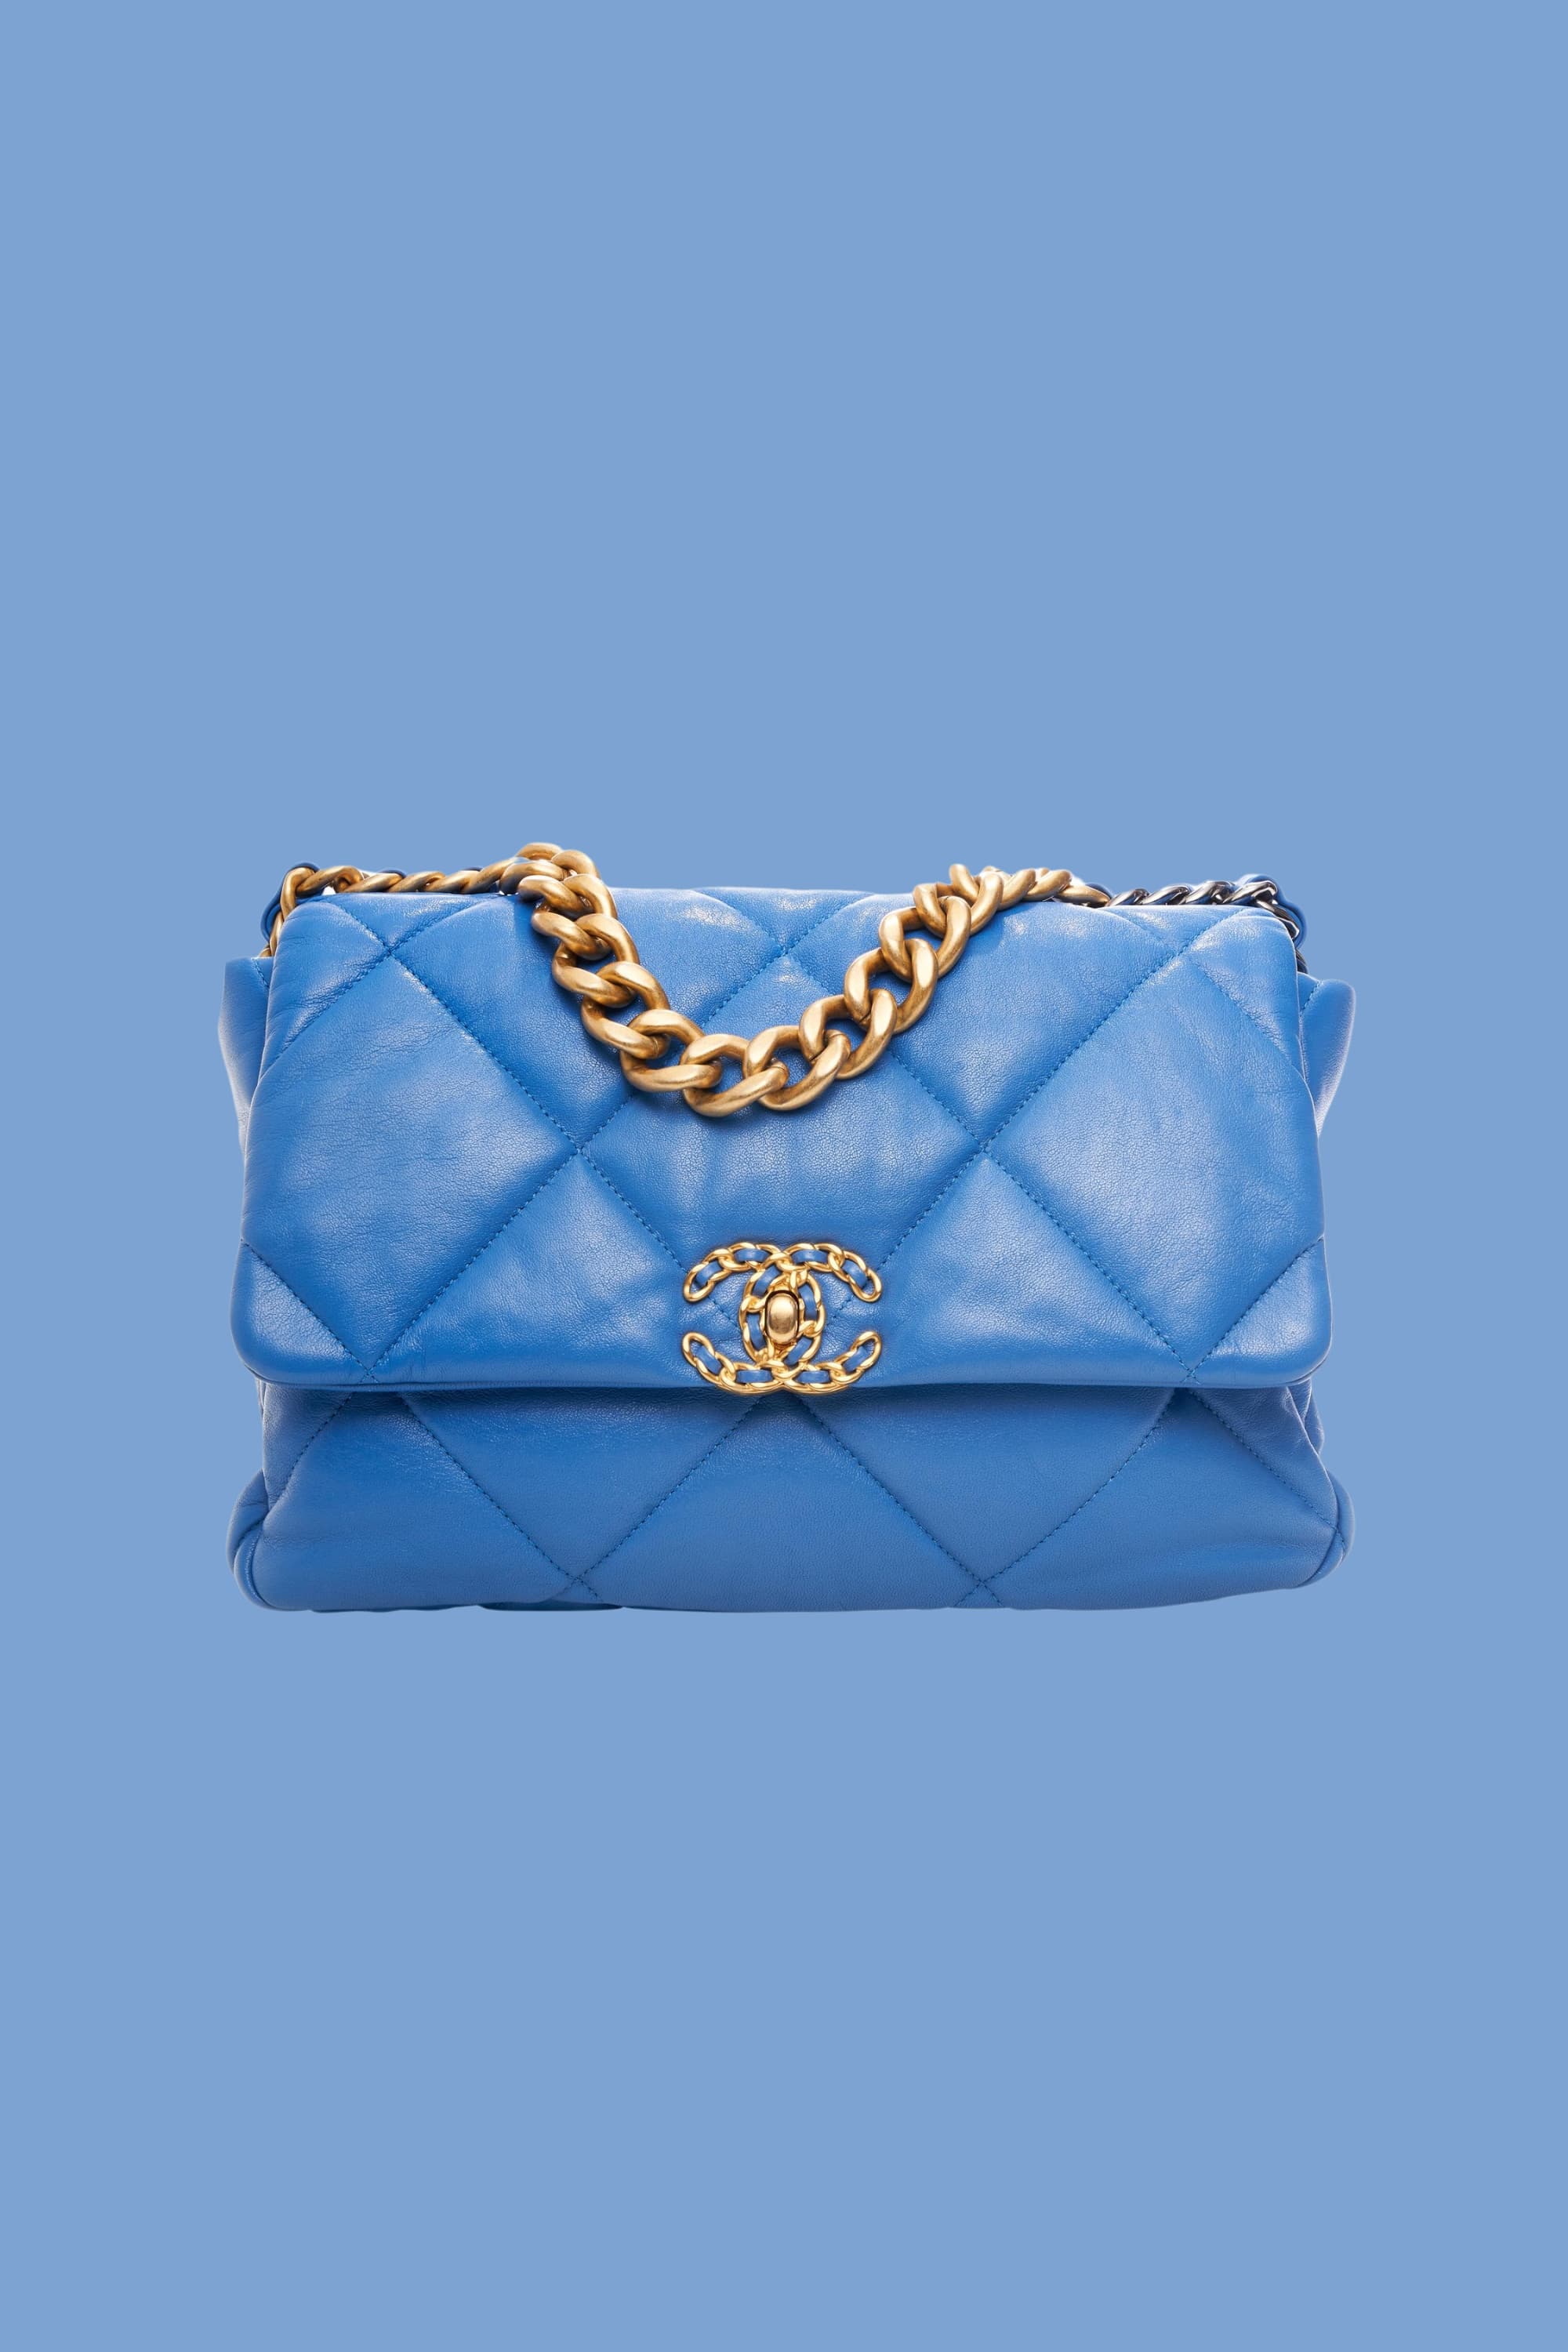 Designer Handbags, Chanel designer resale handbags